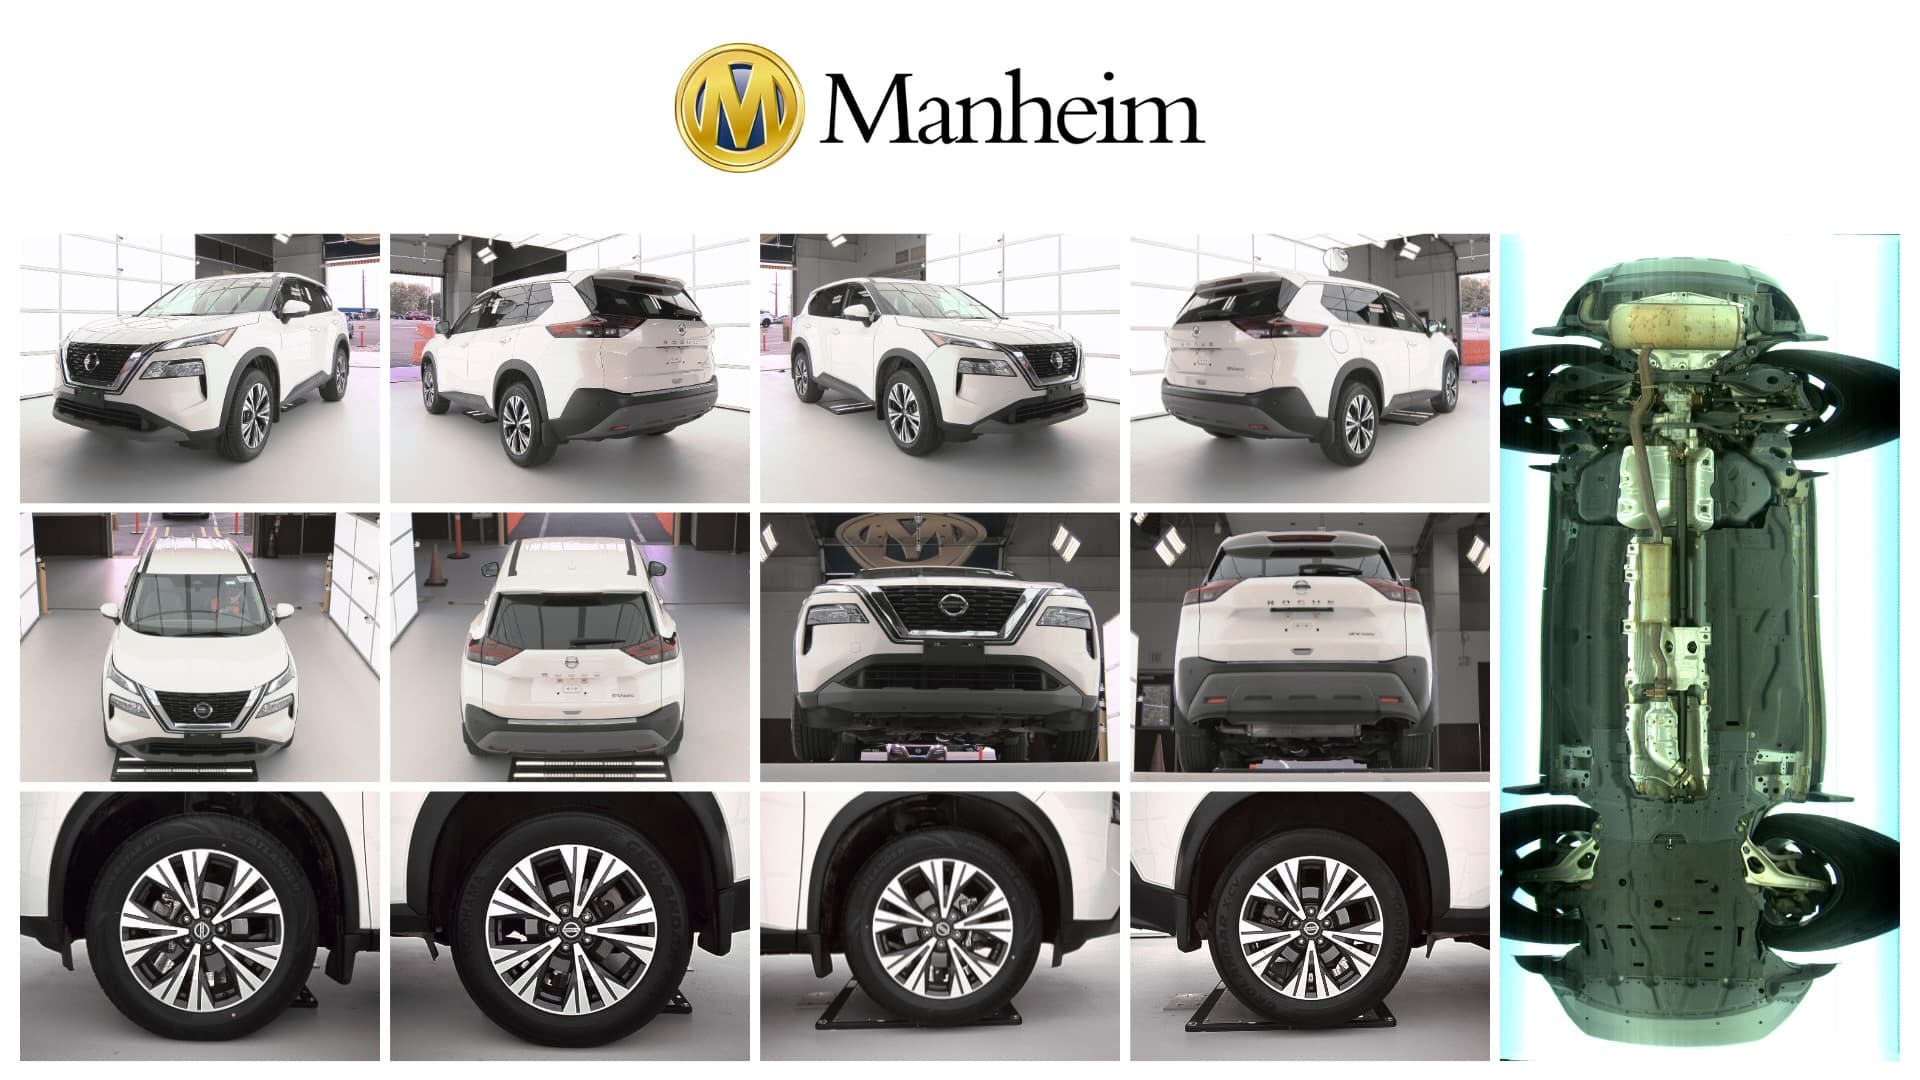 Manheim Launches Three Fixed Imaging Tunnels at Manheim Pennsylvania